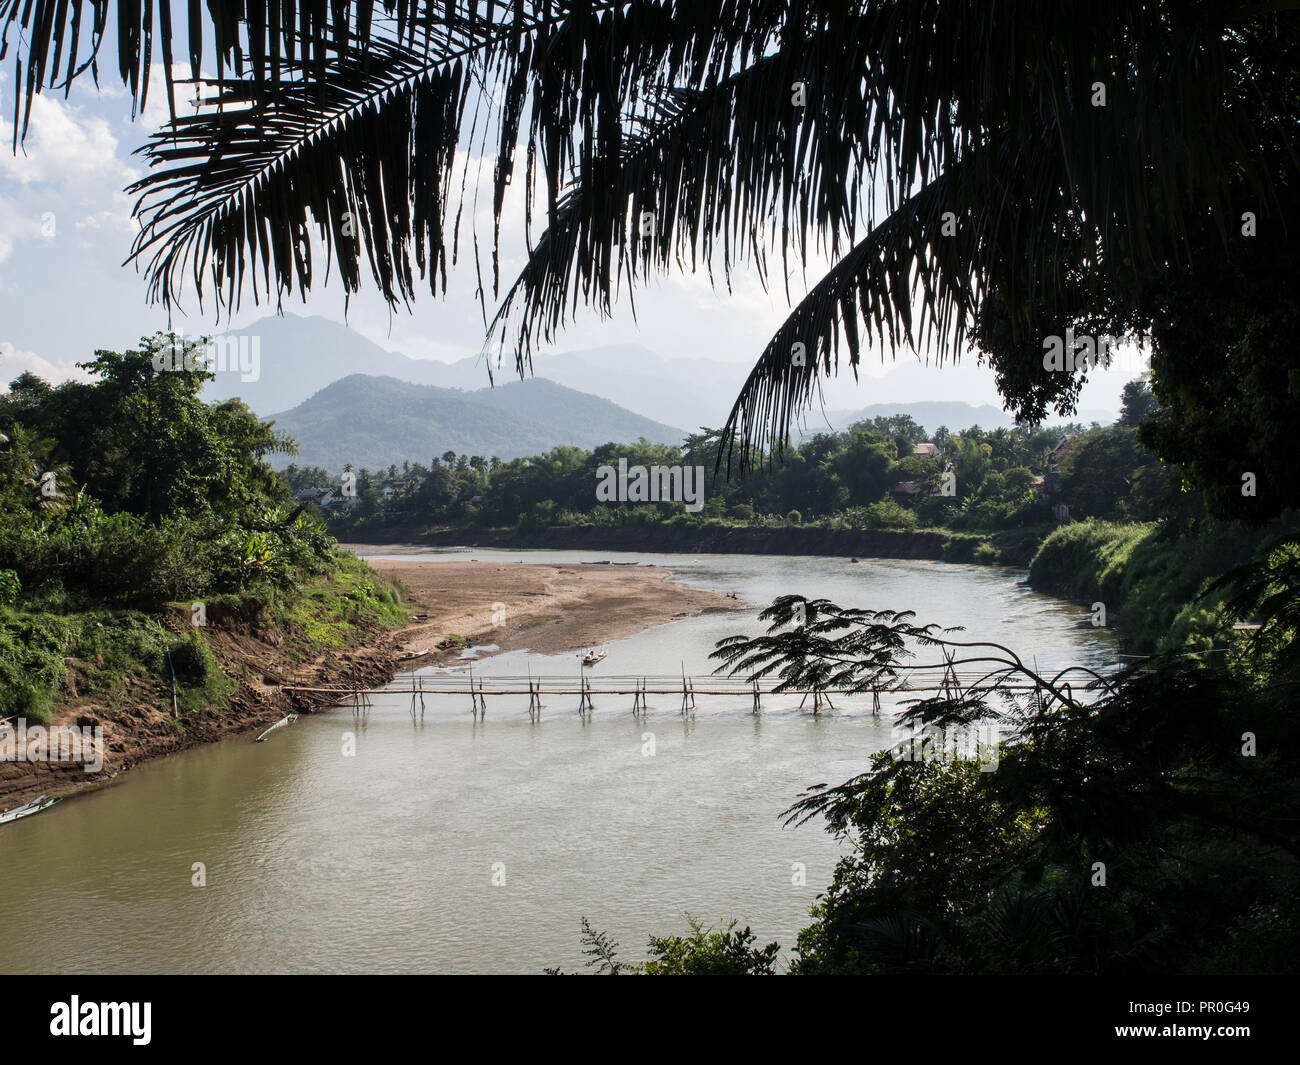 Nam Kang River with mountains, bamboo bridge, and palm trees, Luang Prabang, Laos, Indochina, Southeast Asia, Asia Stock Photo